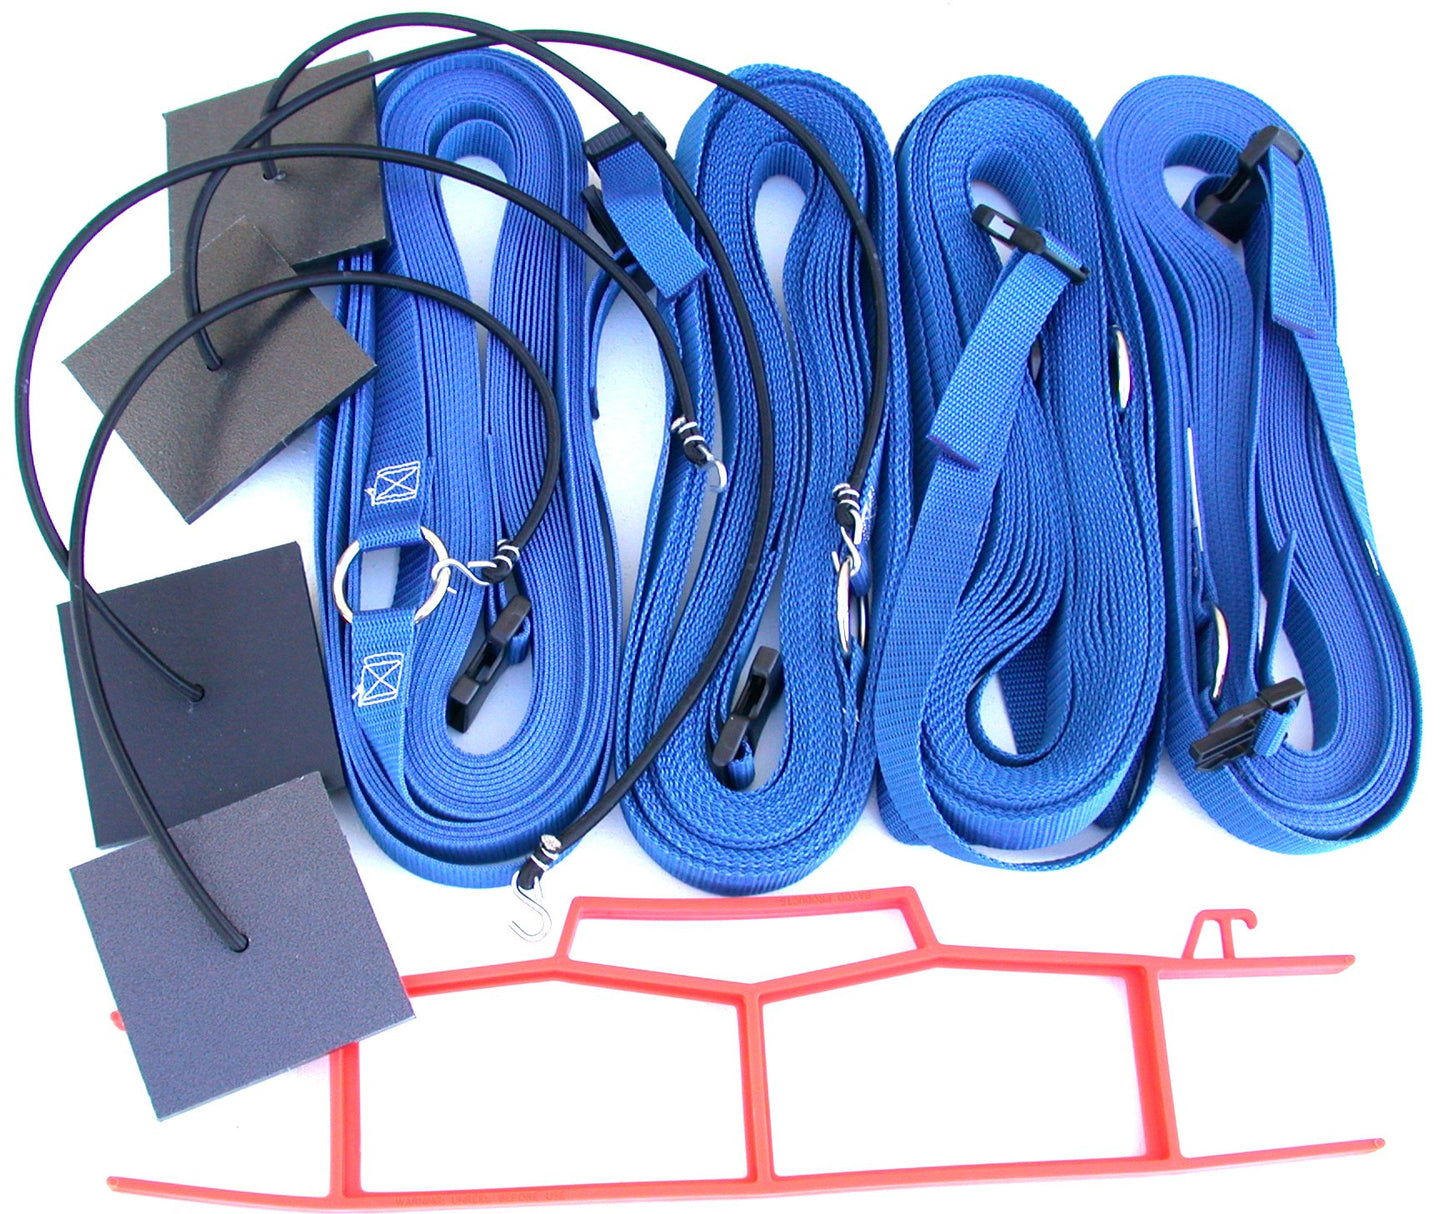 17ABUB-blue 1-inch adjustable web boundary, sand plates, storage winder